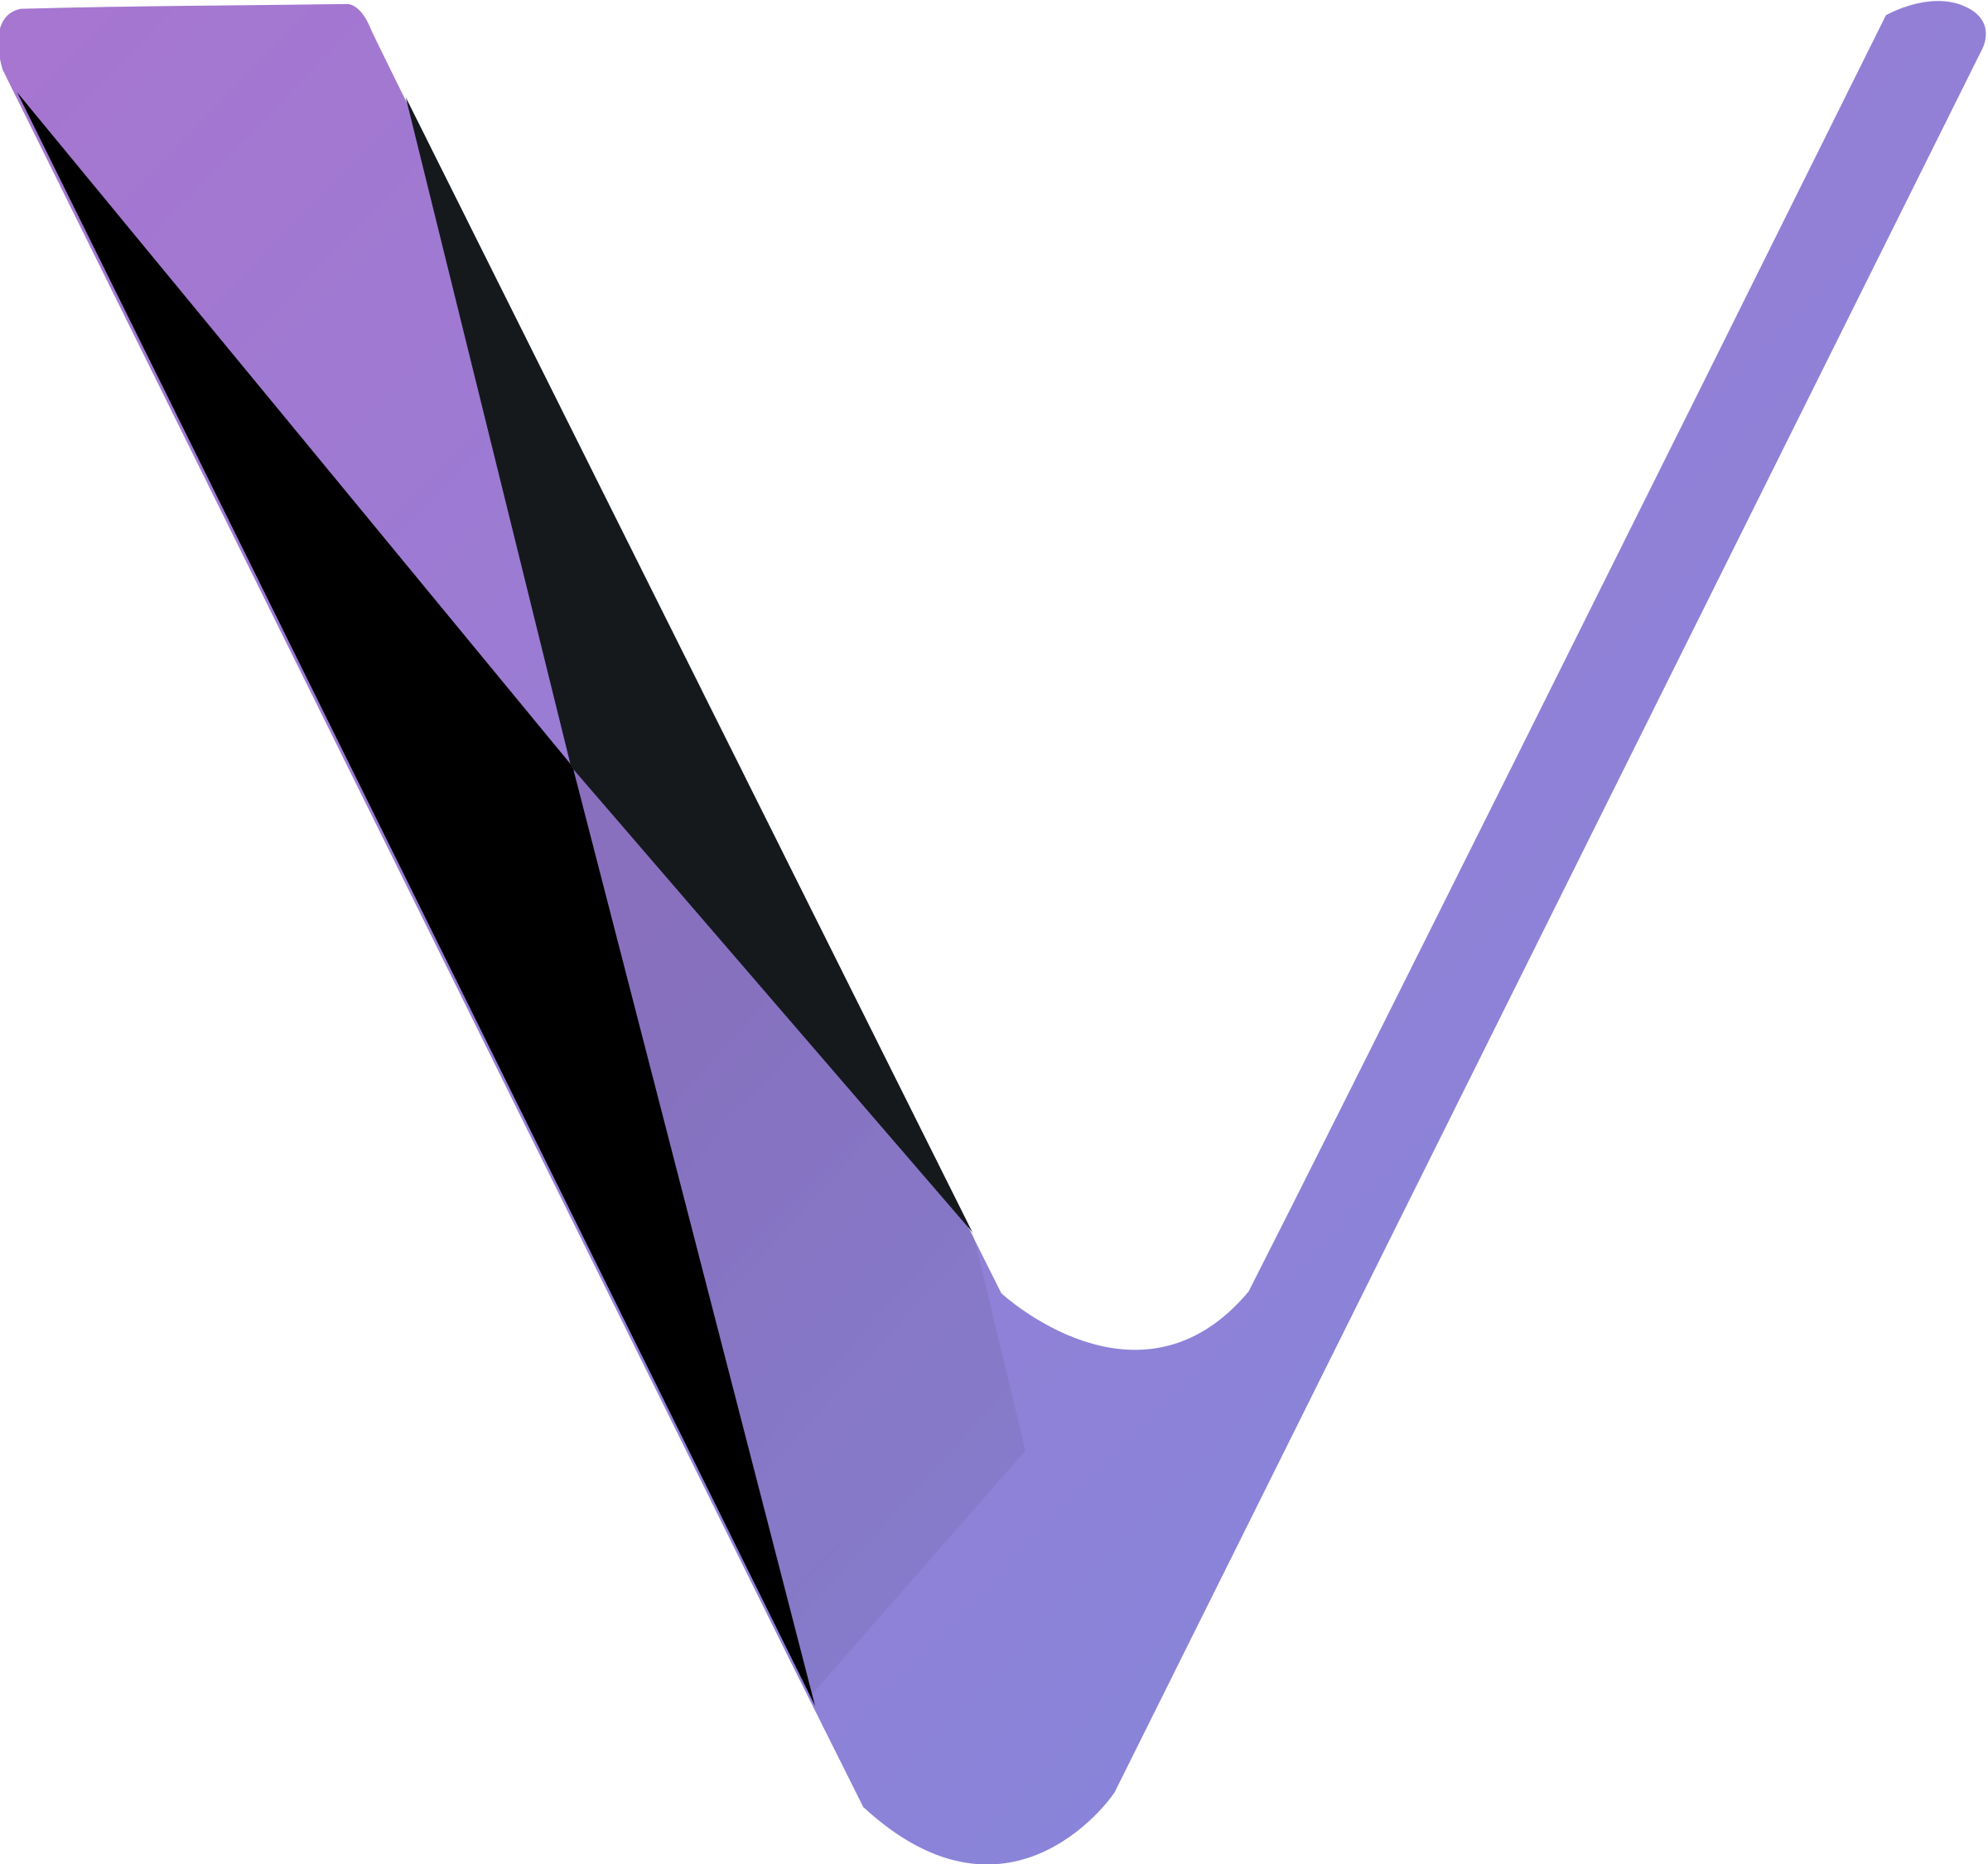 Vechain Logo - VeChain Logo PNG Transparent & SVG Vector - Freebie Supply